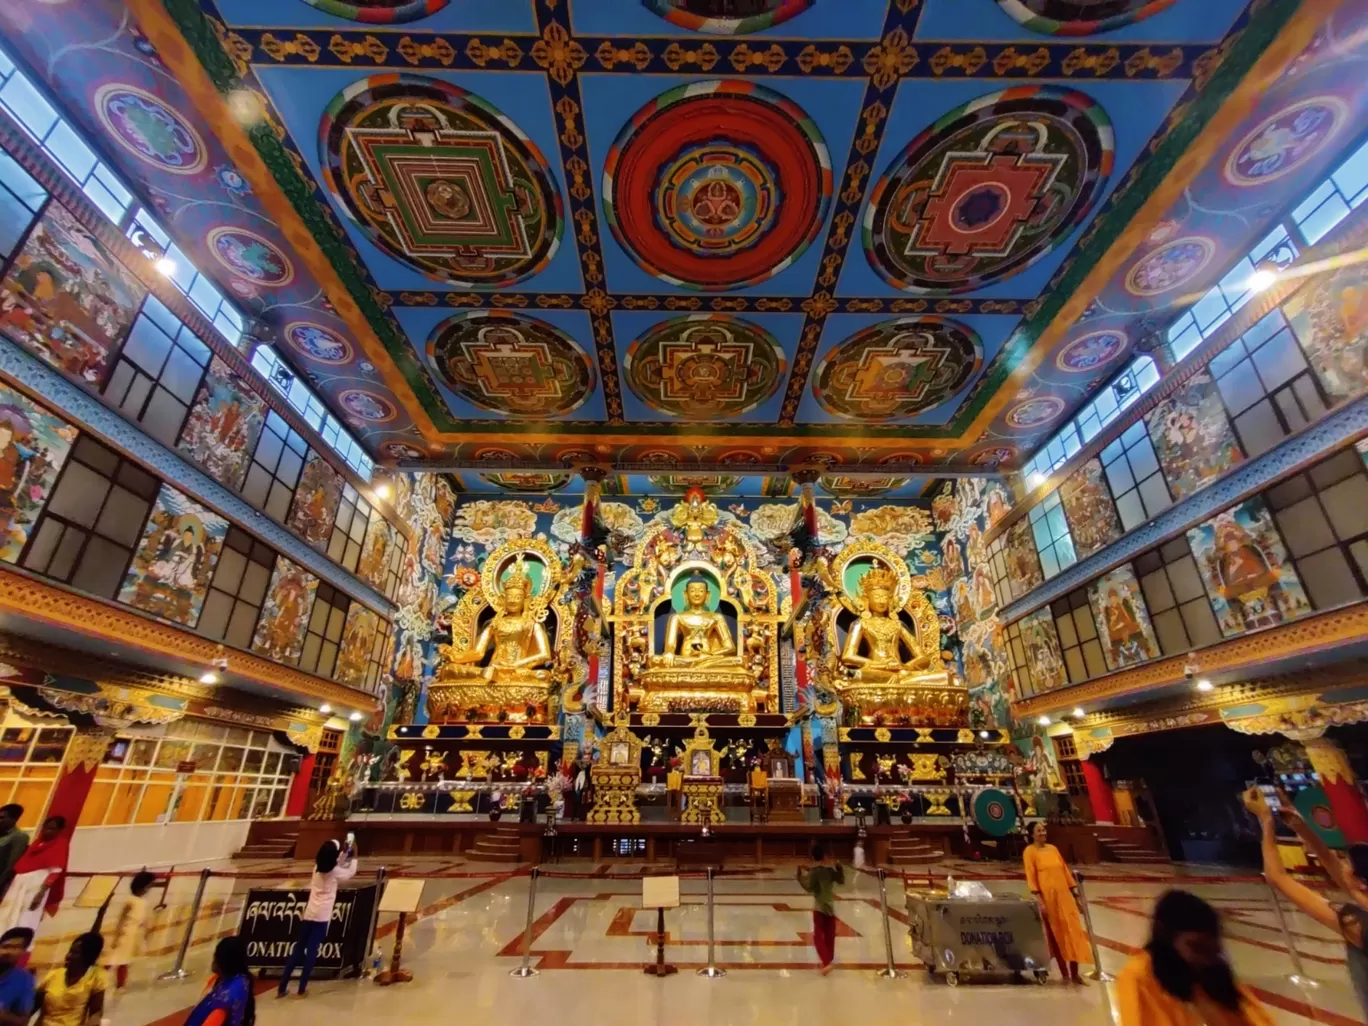 Photo of Namdroling Monastery Golden Temple By Krishan saini